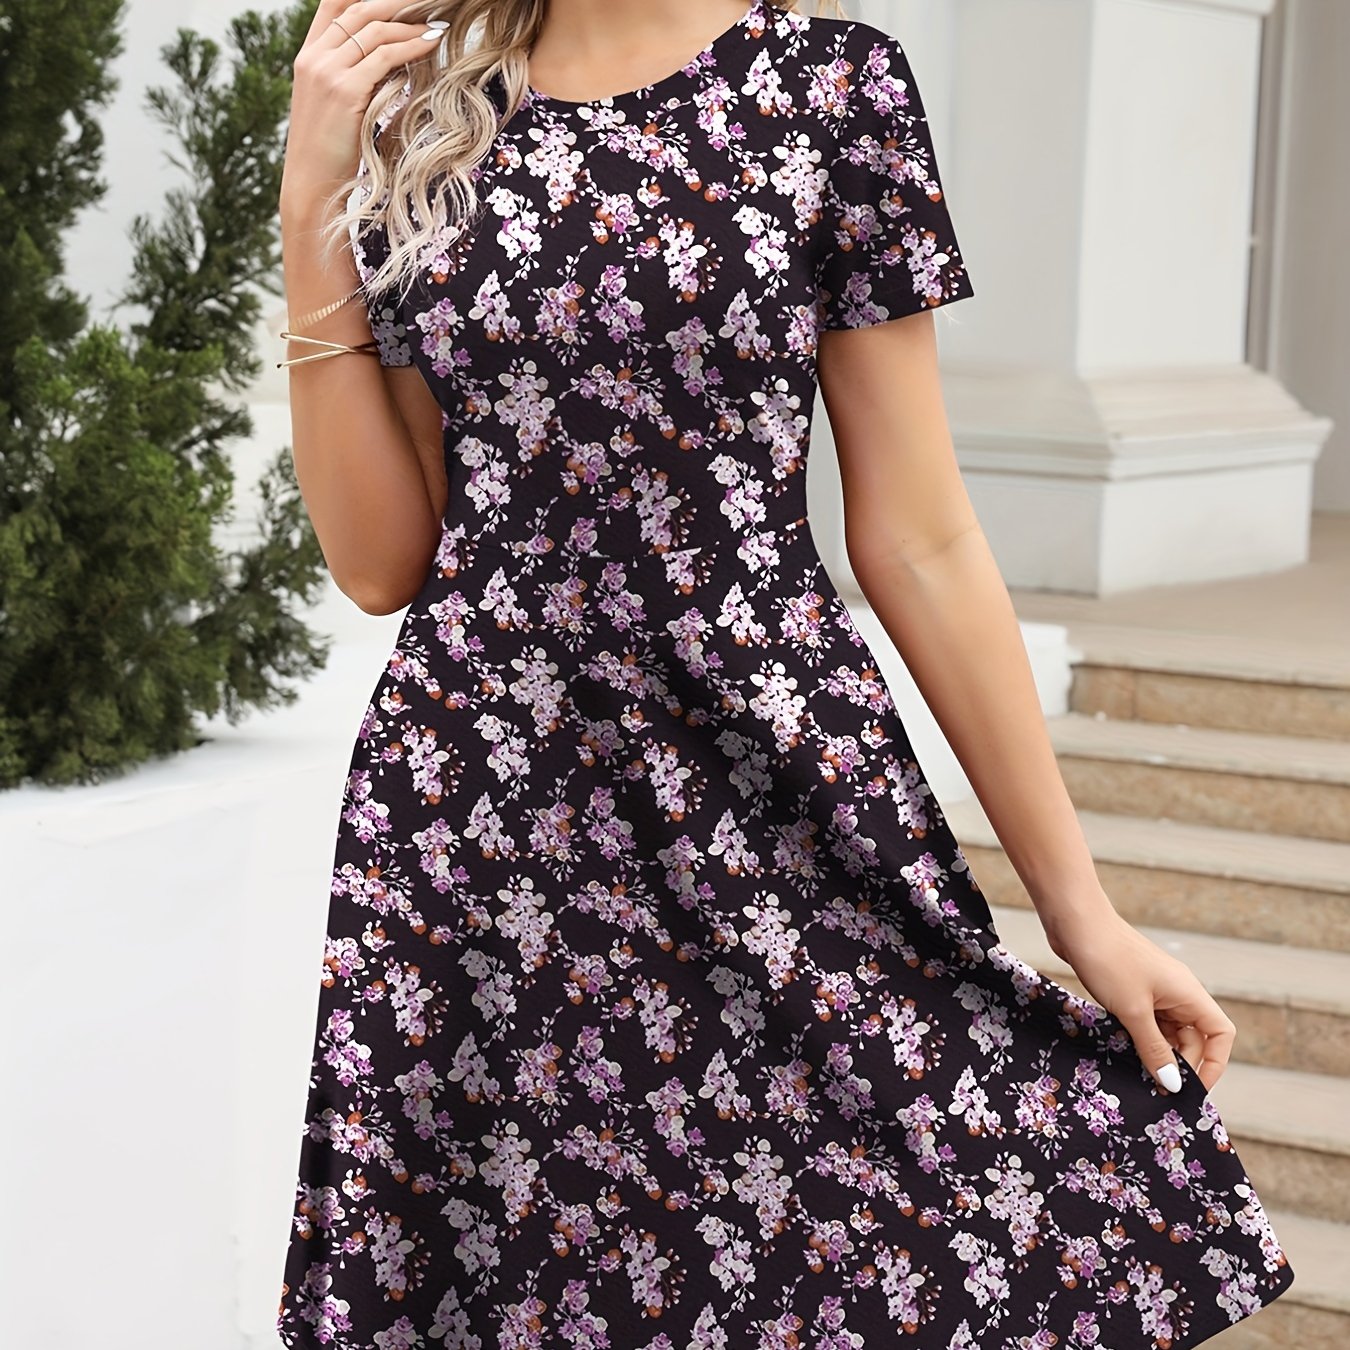 Vzyzv Floral Print Crew Neck Dress, Vintage Short Sleeve Dress For Spring & Summer, Women's Clothing